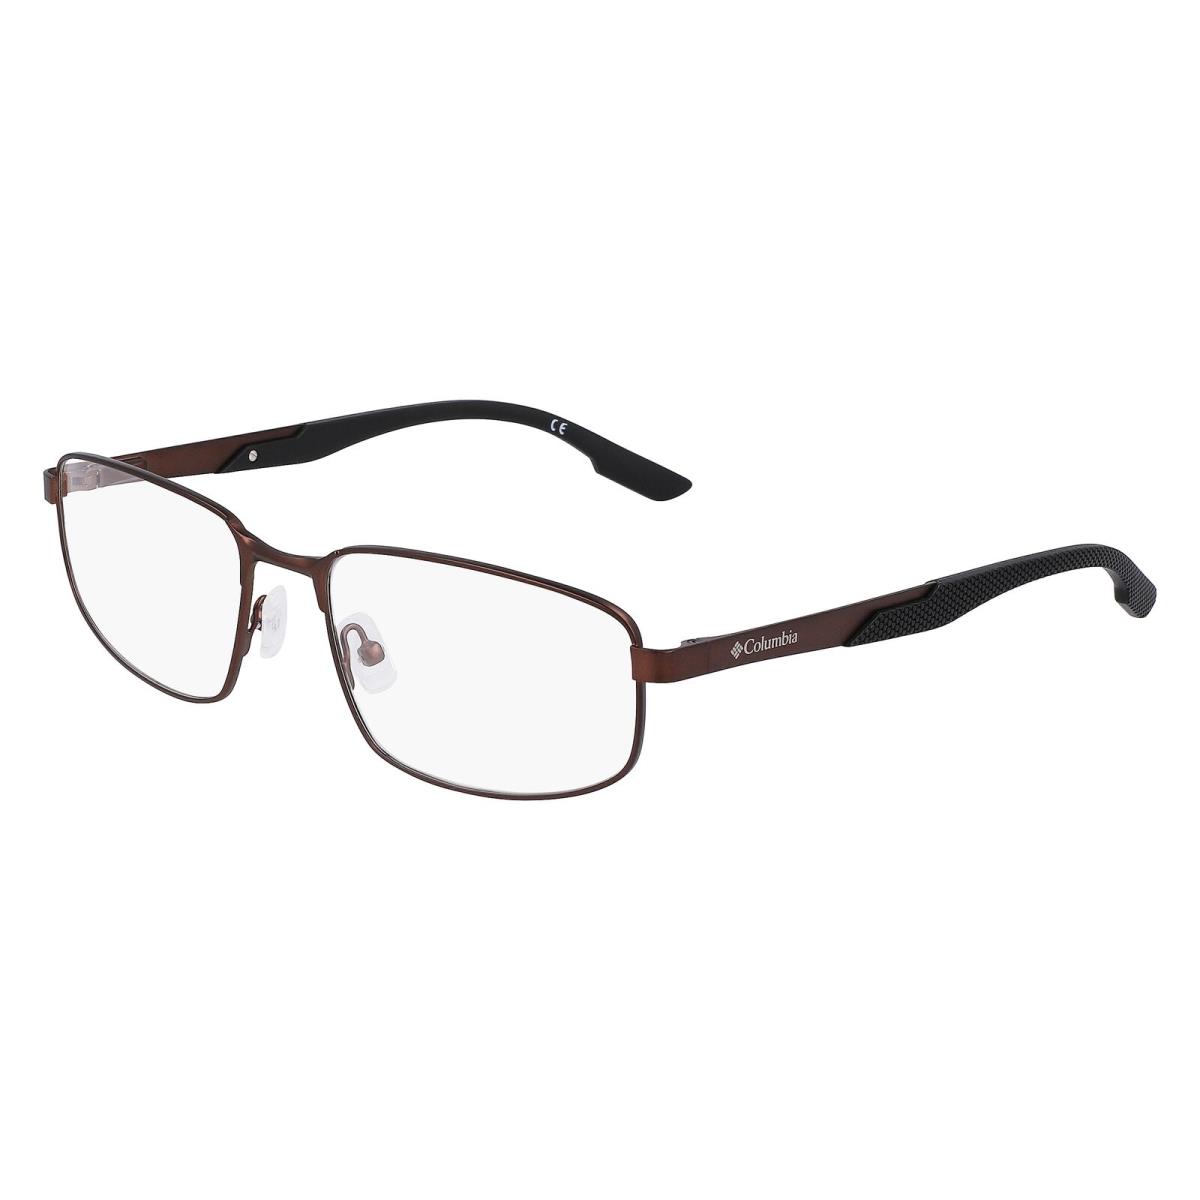 Men Columbia C3040 216 57 Eyeglasses